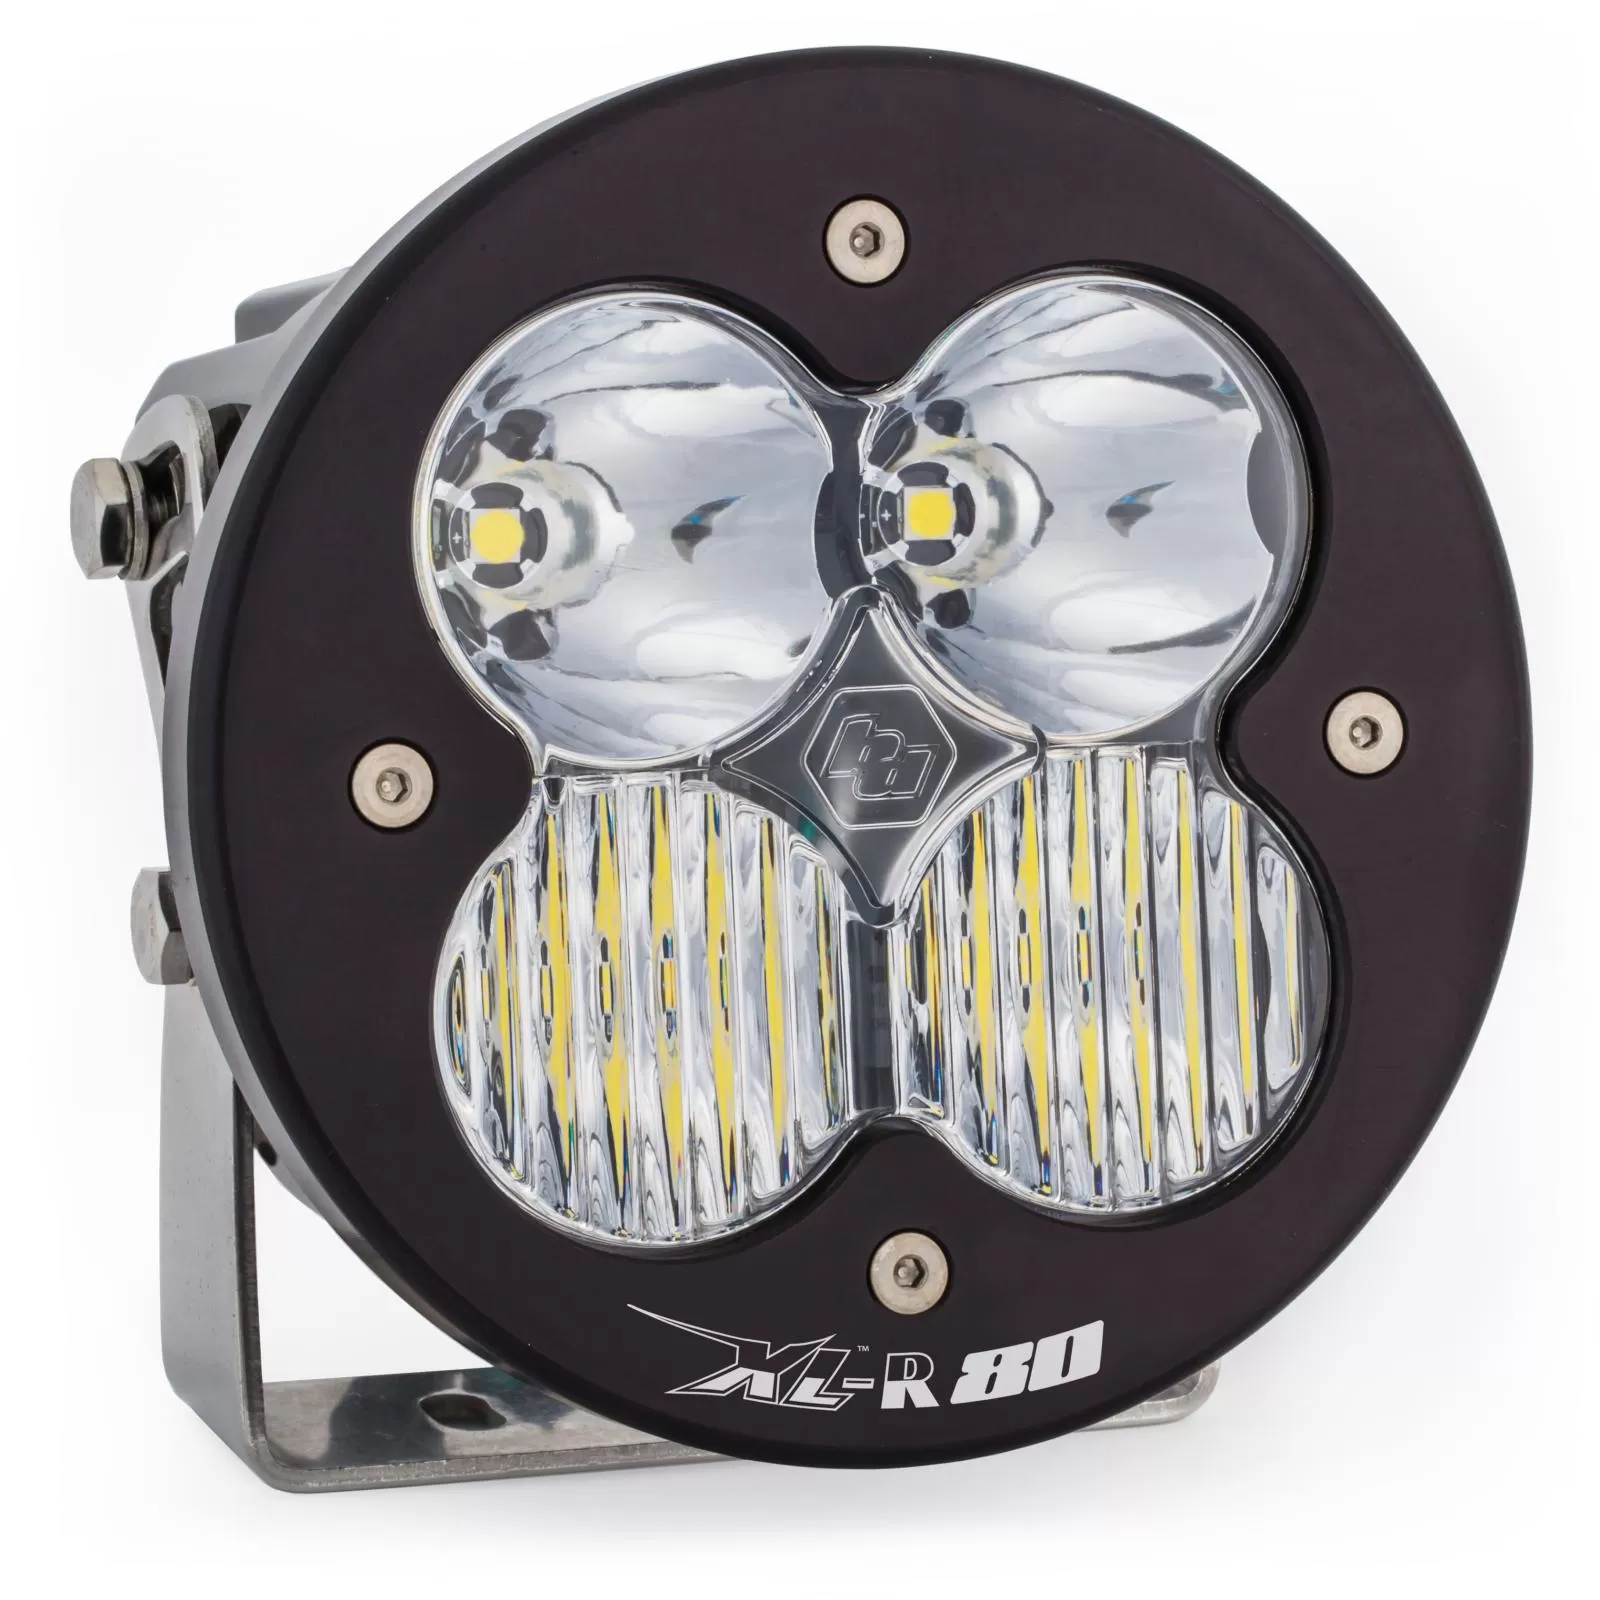 Baja Designs Clear Lens Spot XL R 80 Driving/Combo LED Light Pods Each - 760003